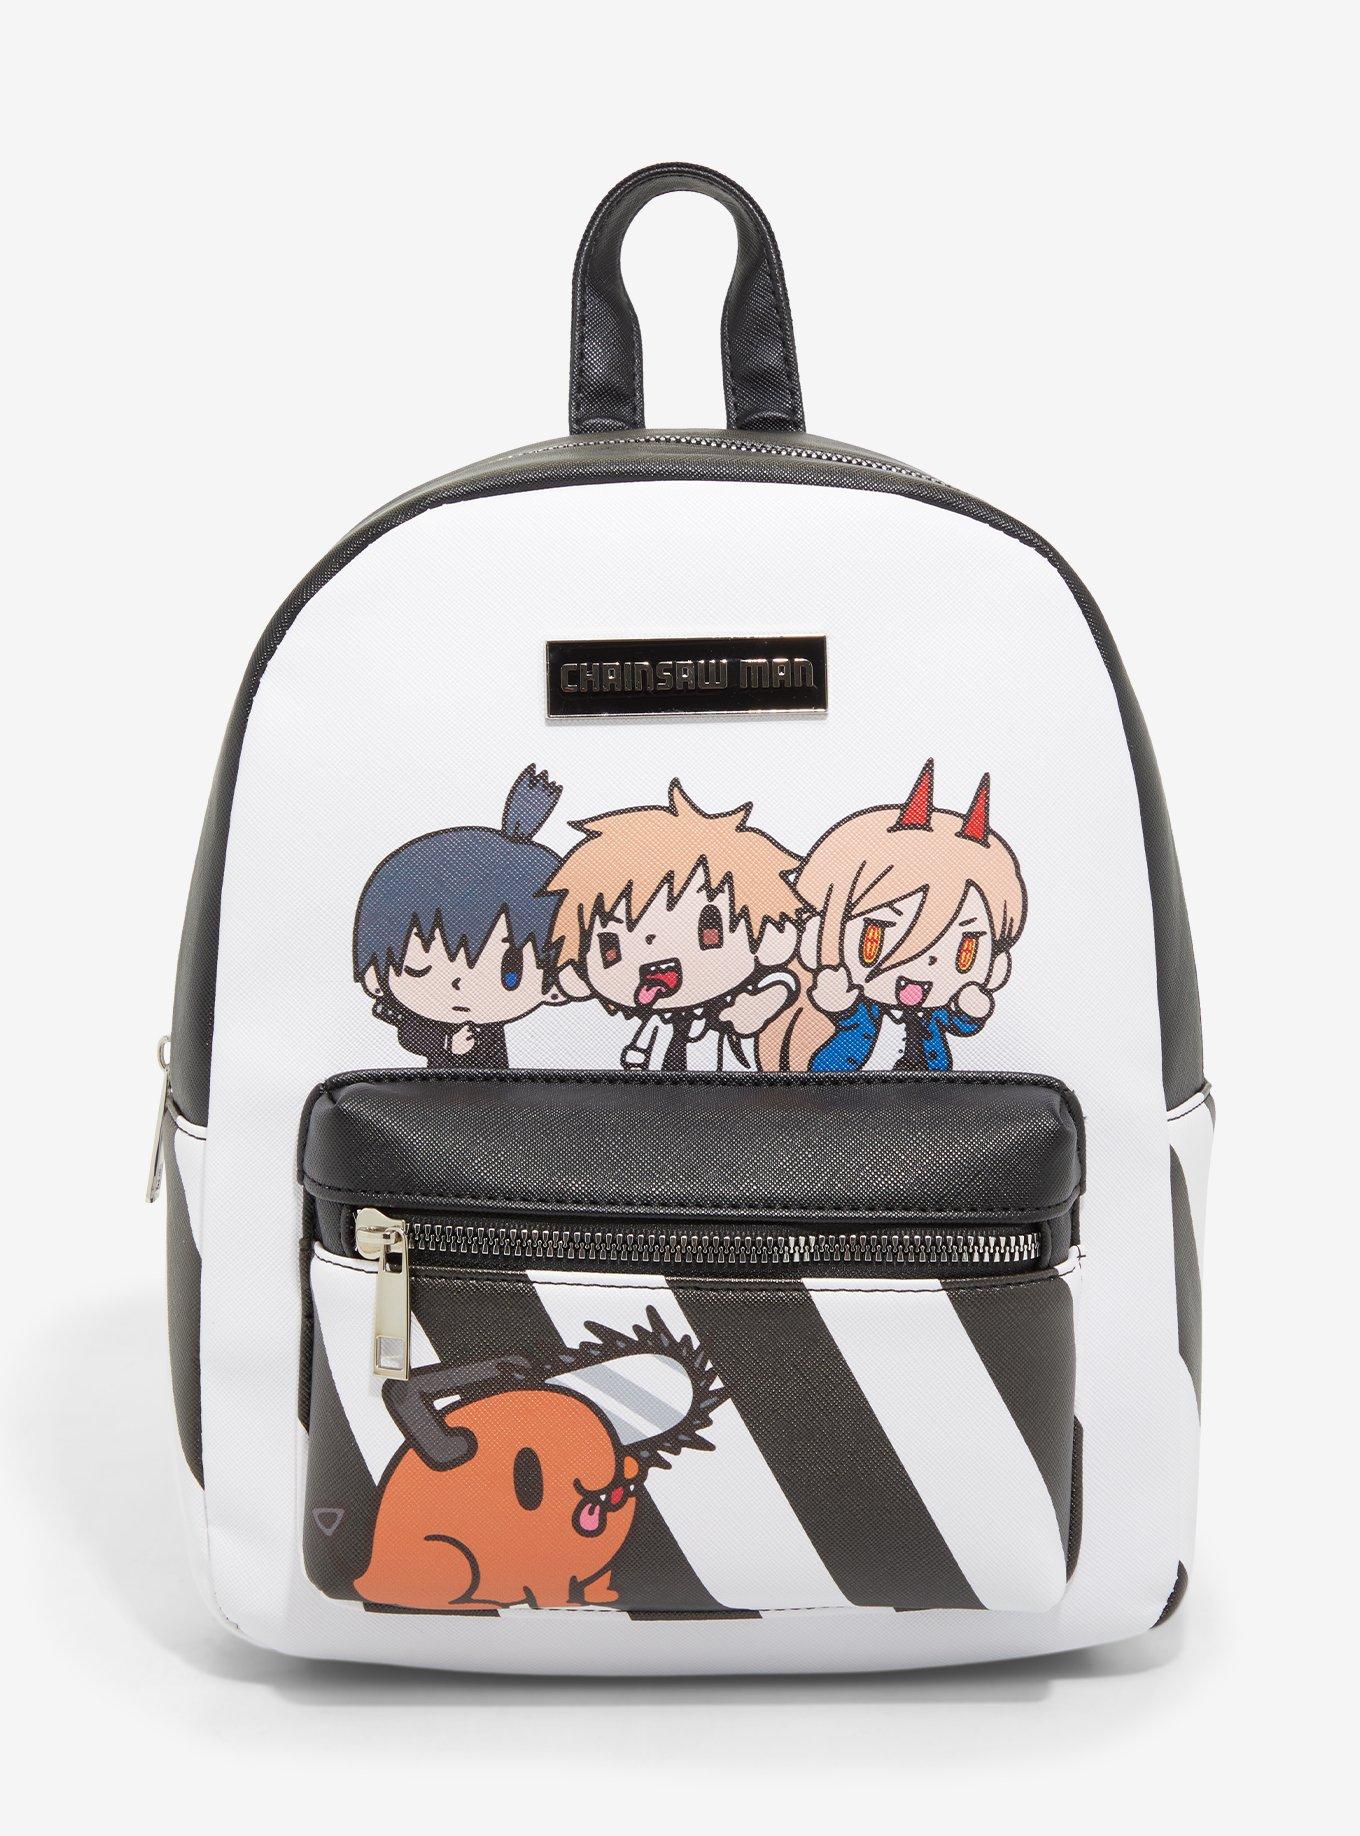 Kid's Mini Rider Backpack